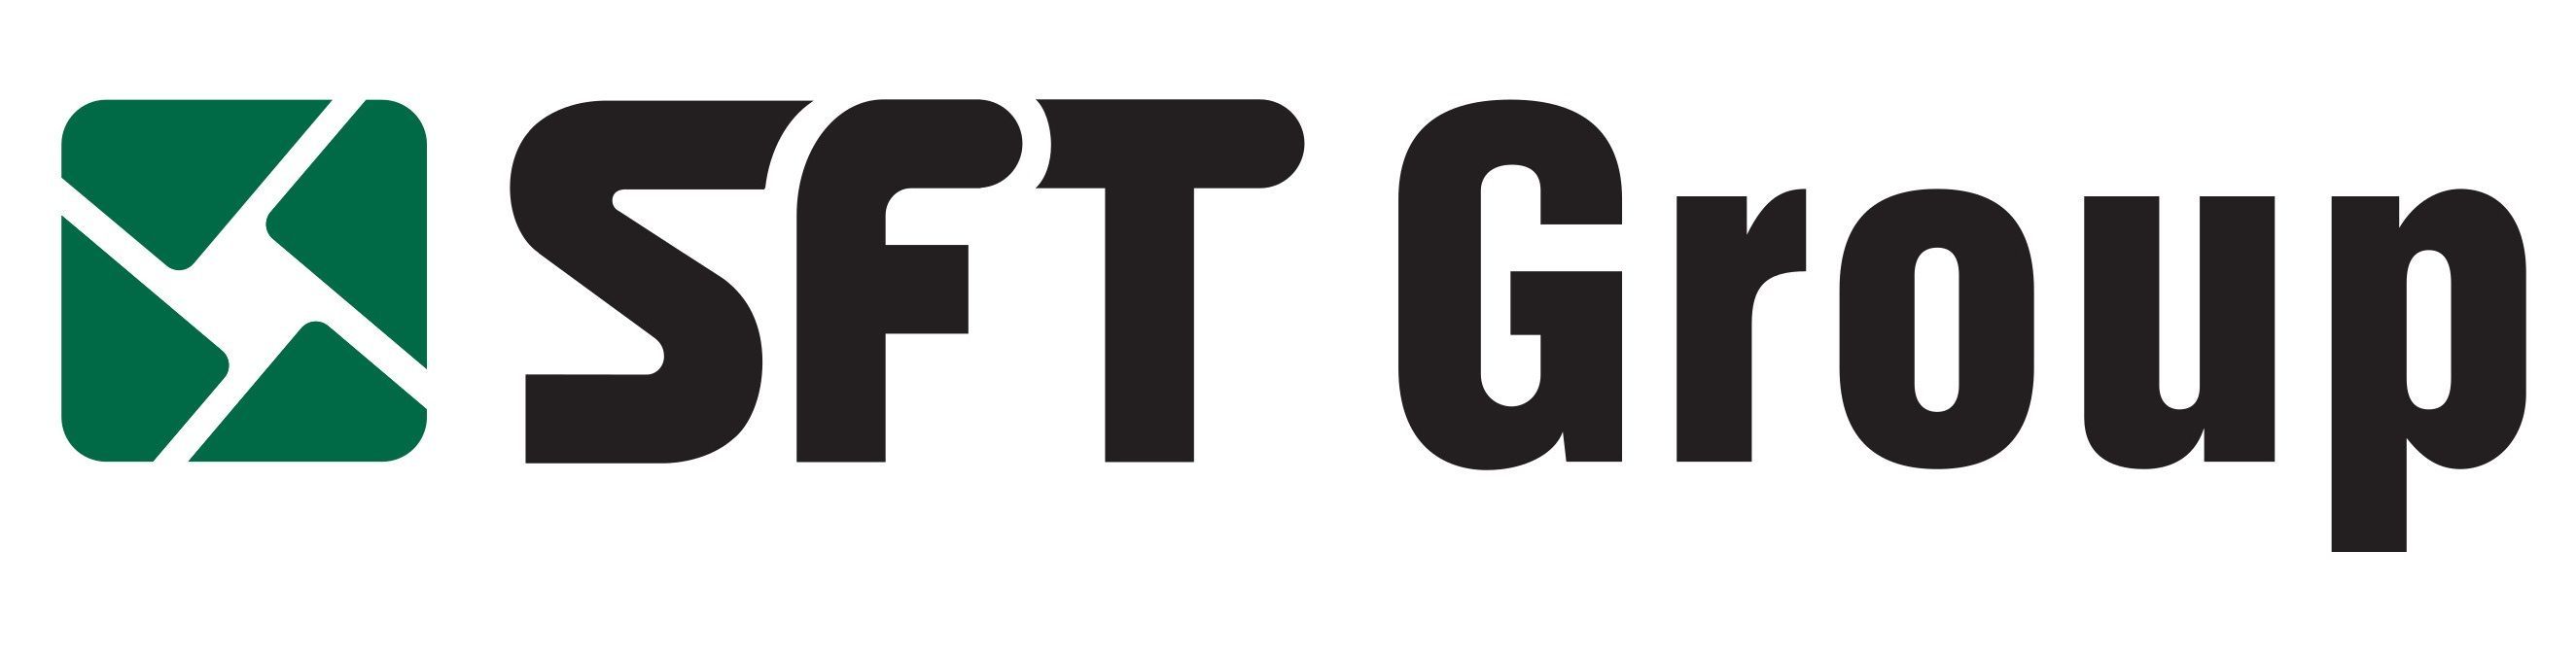 Sft turkey. SFT Group. SDS-Group лого. ИНПРО Технолоджис. SFT Group logo.